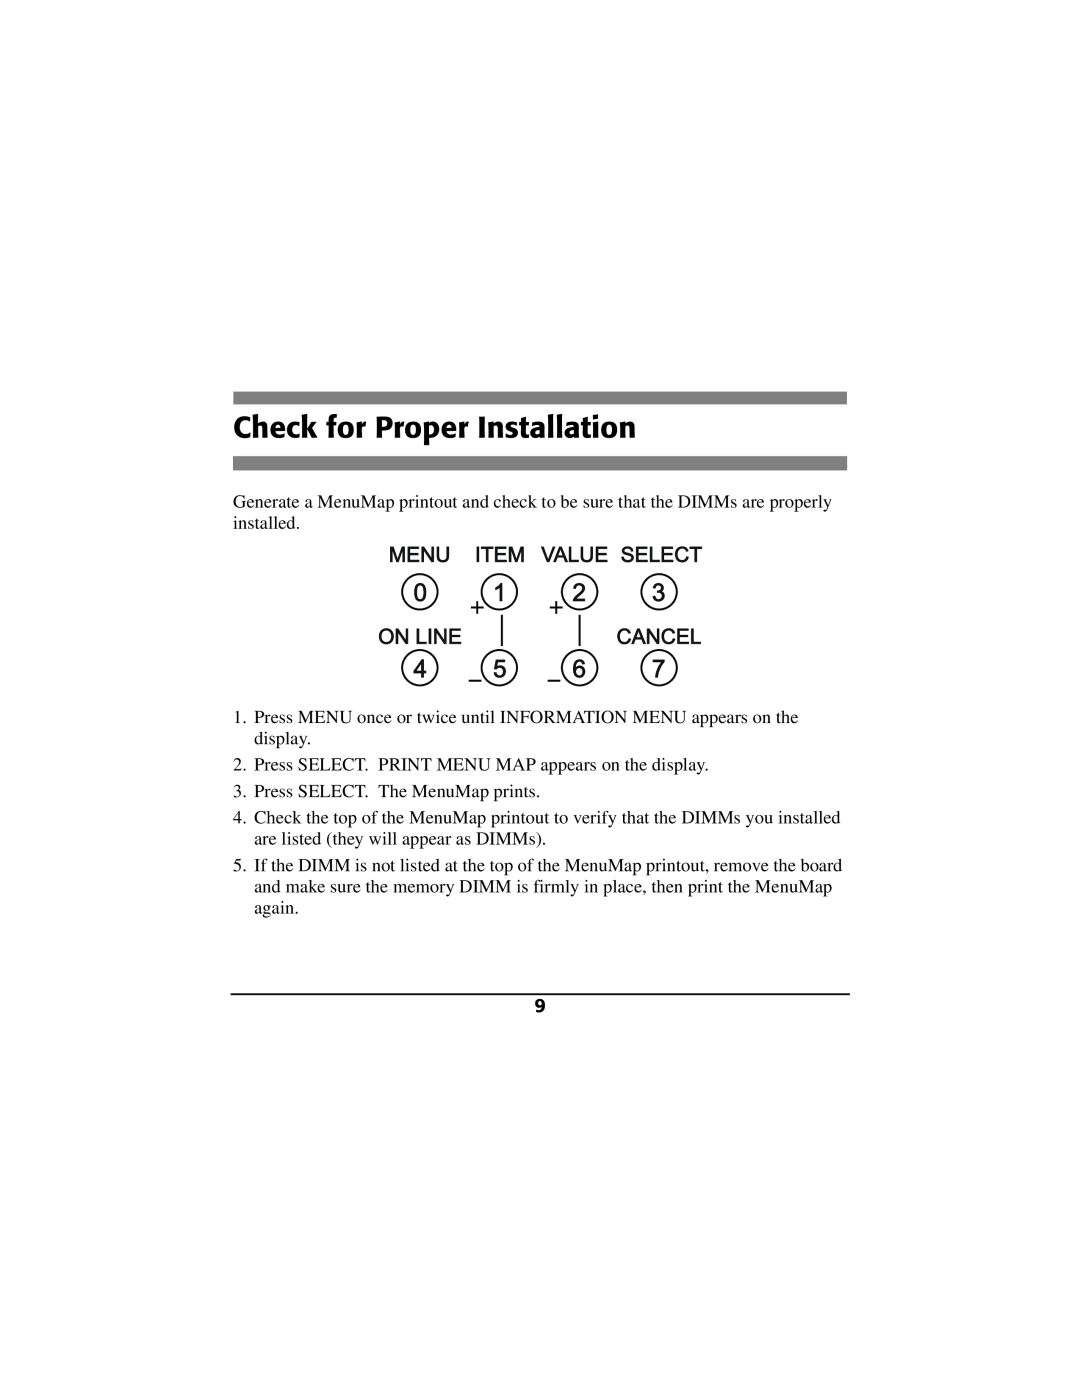 Oki 70040901 installation instructions Check for Proper Installation, 4 5, Menu Item Value Select, On Line, Cancel 